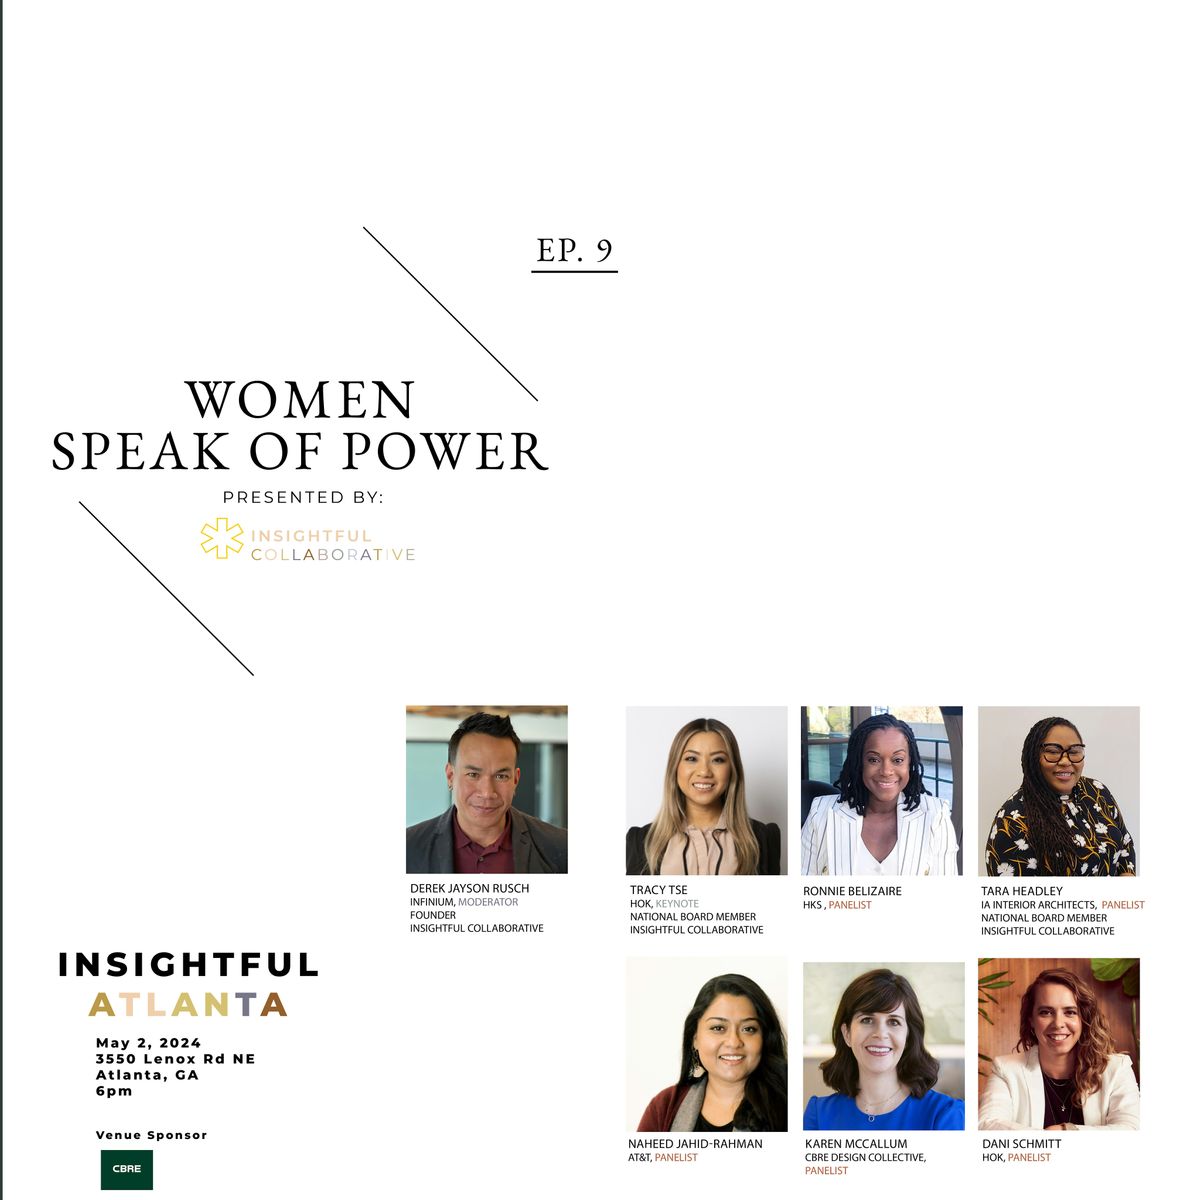 Insightful Collaborative "Women Speak of Power" in Atlanta on May 2, 2024